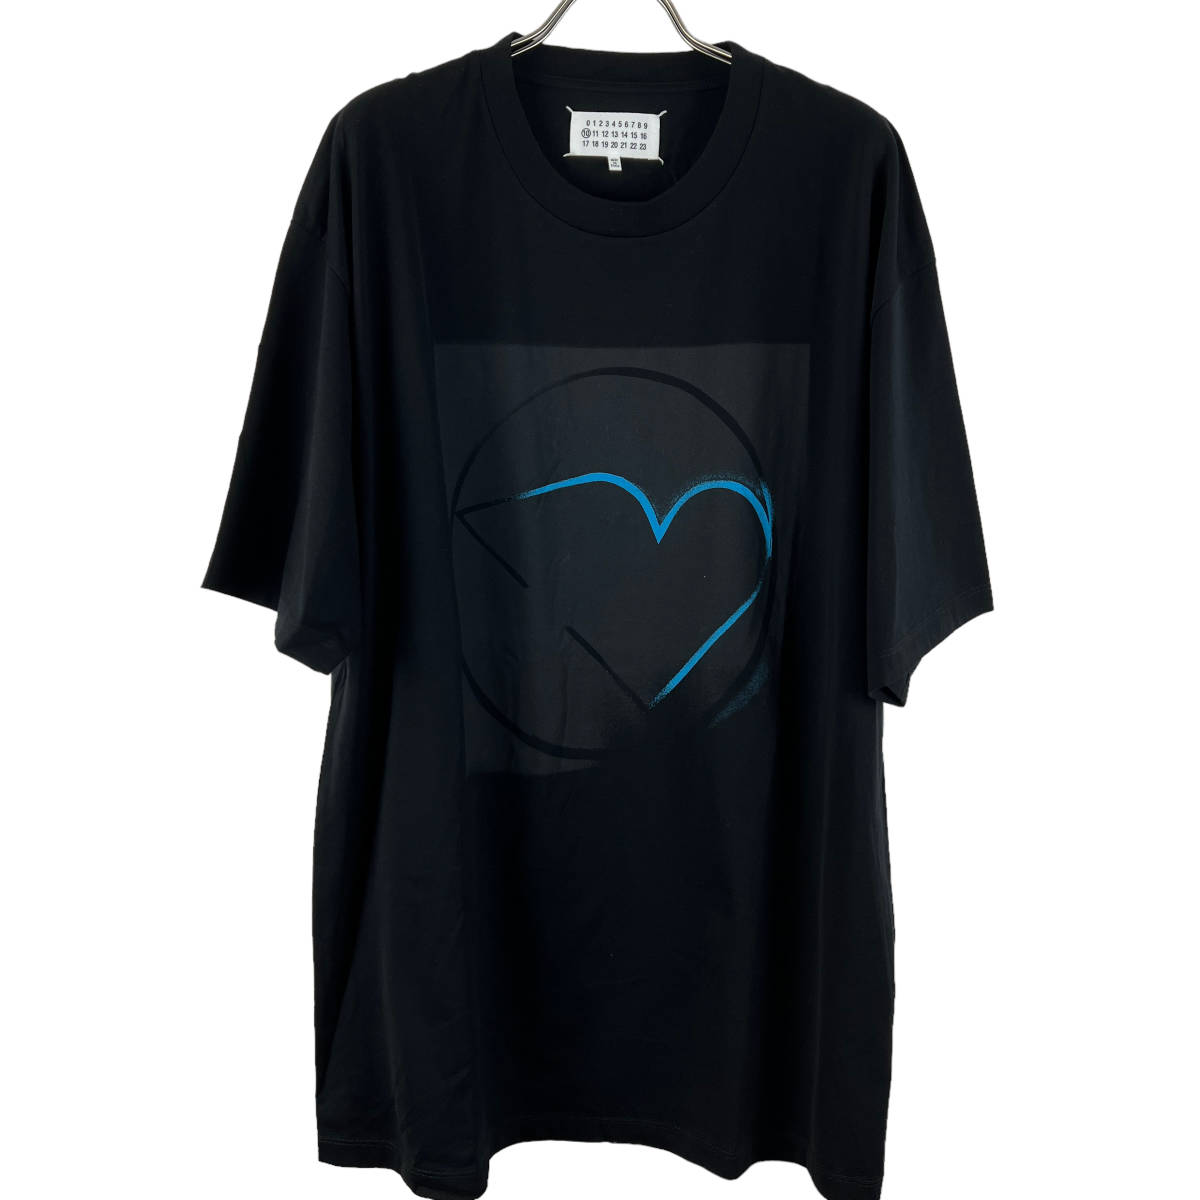 Maison Margiela (メゾン マルジェラ) Blue Heart Pattern T Shirt (black)